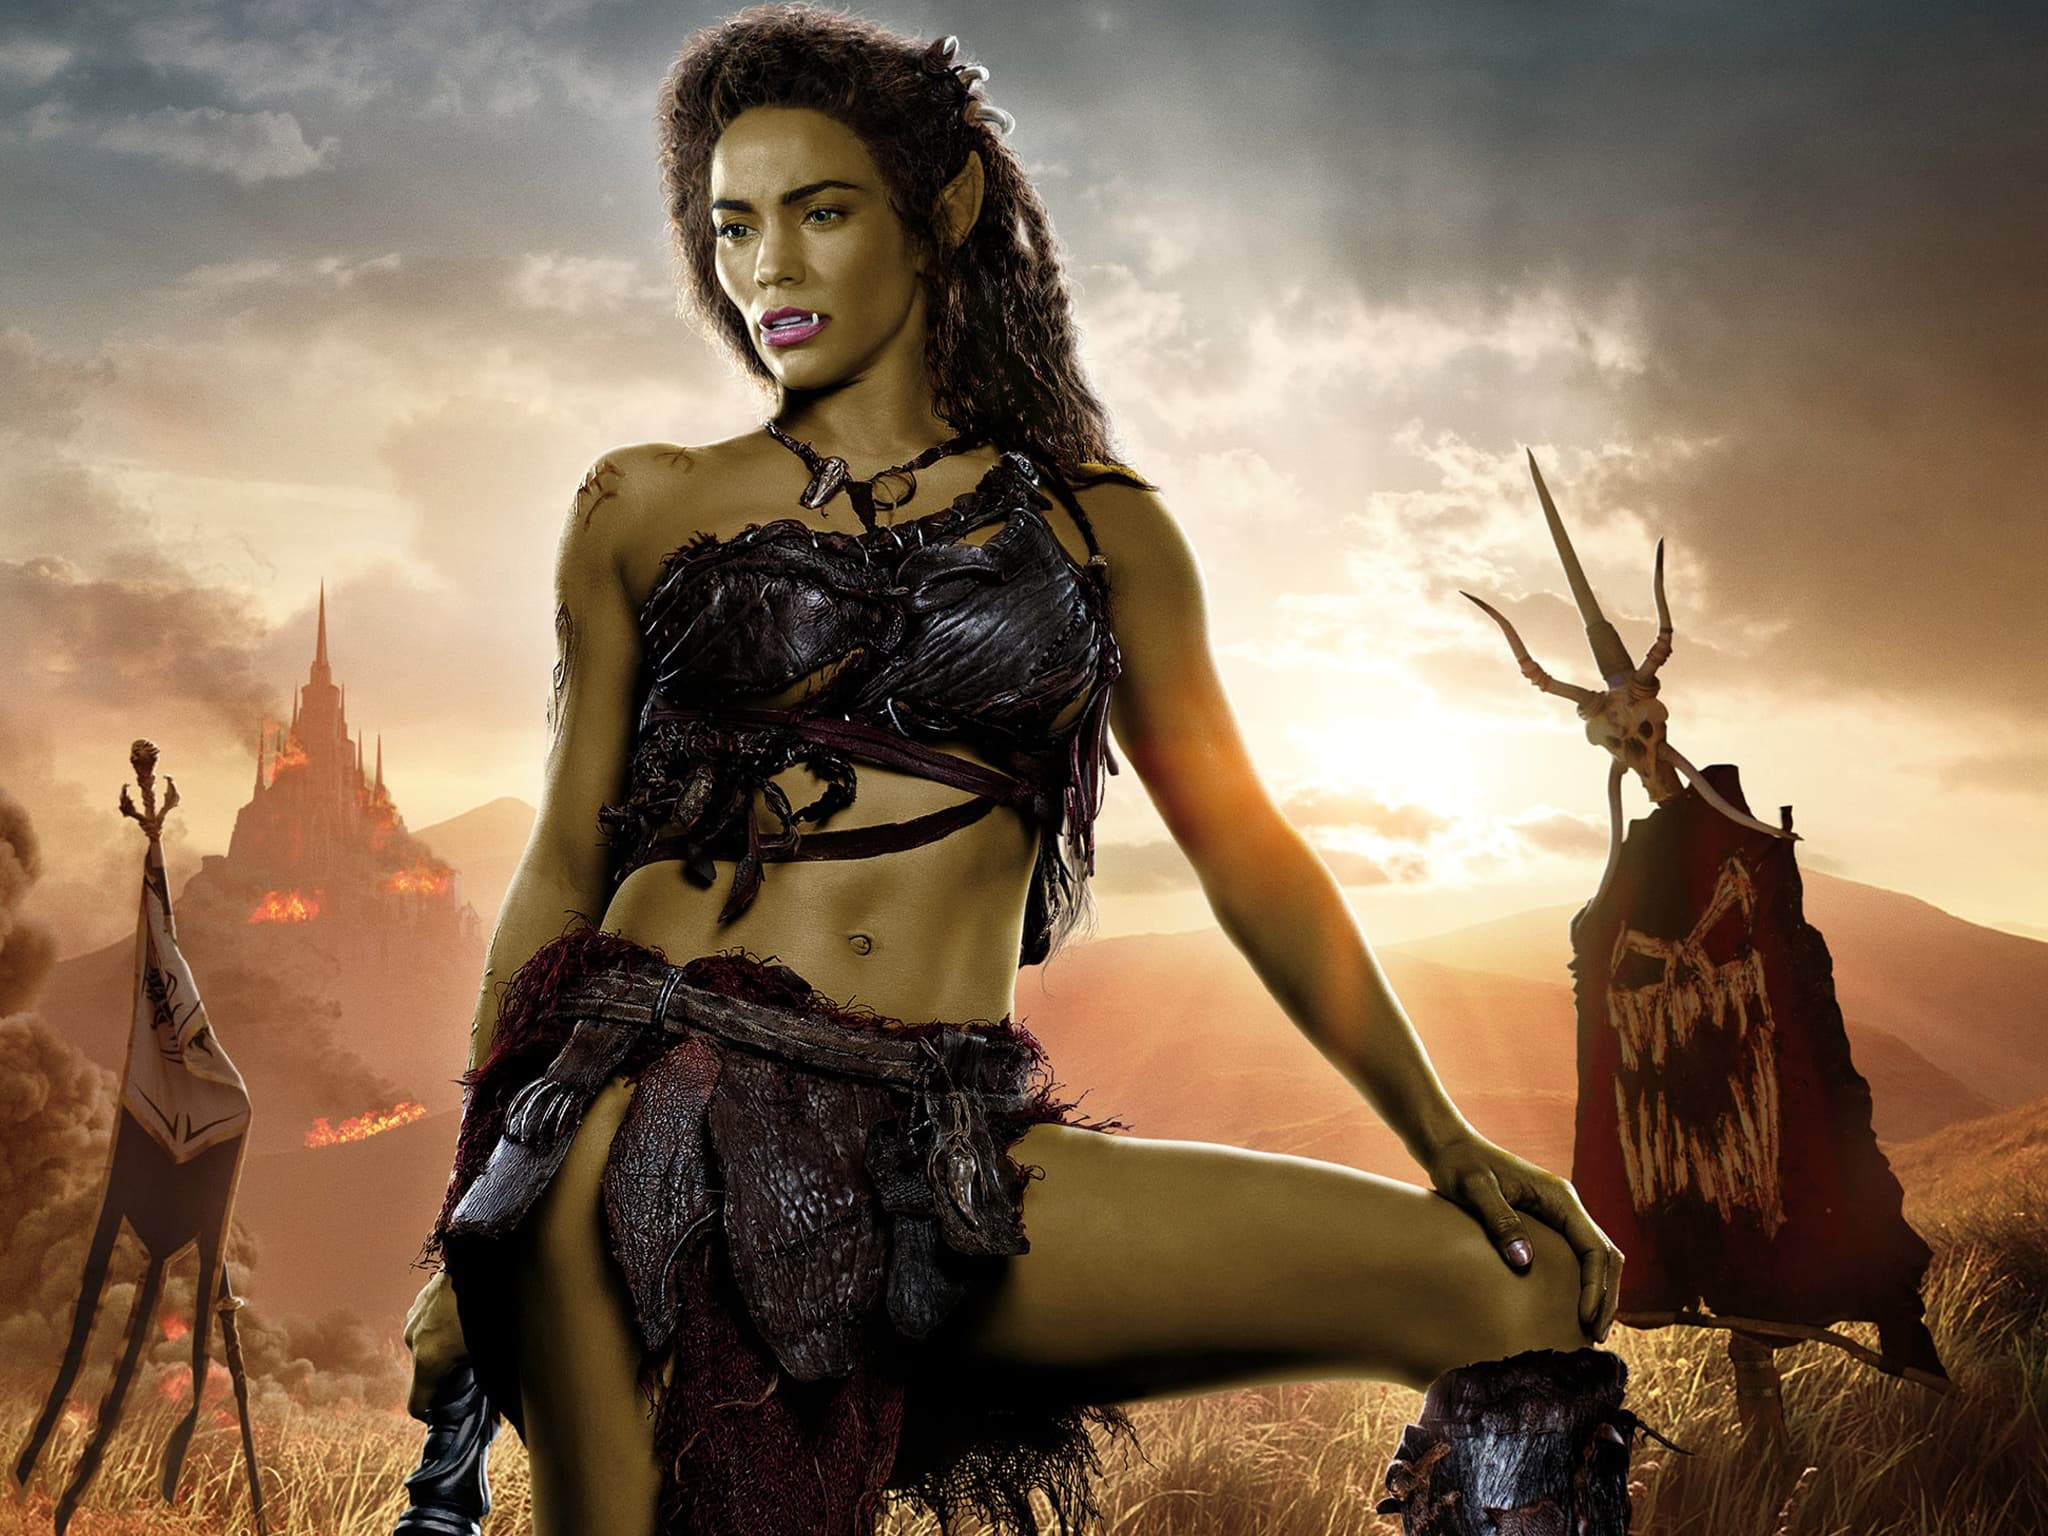 Paula Patton as Garona Warcraft movie HD wallpaper for Desktop